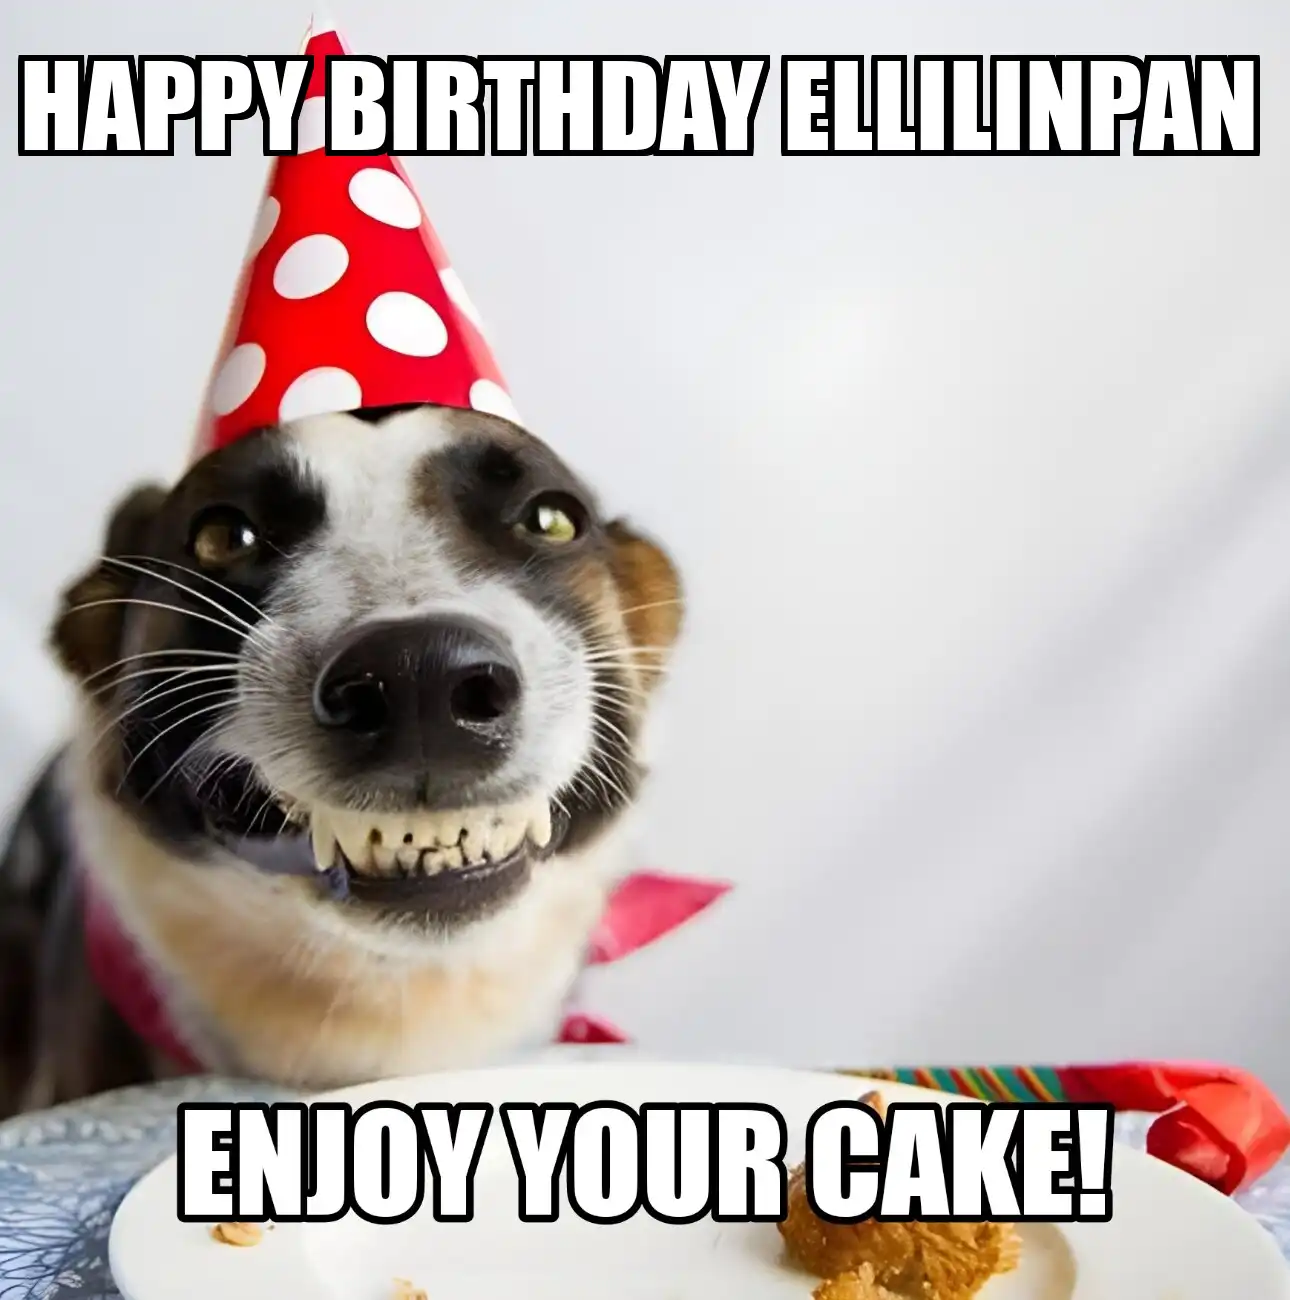 Happy Birthday Ellilinpan Enjoy Your Cake Dog Meme